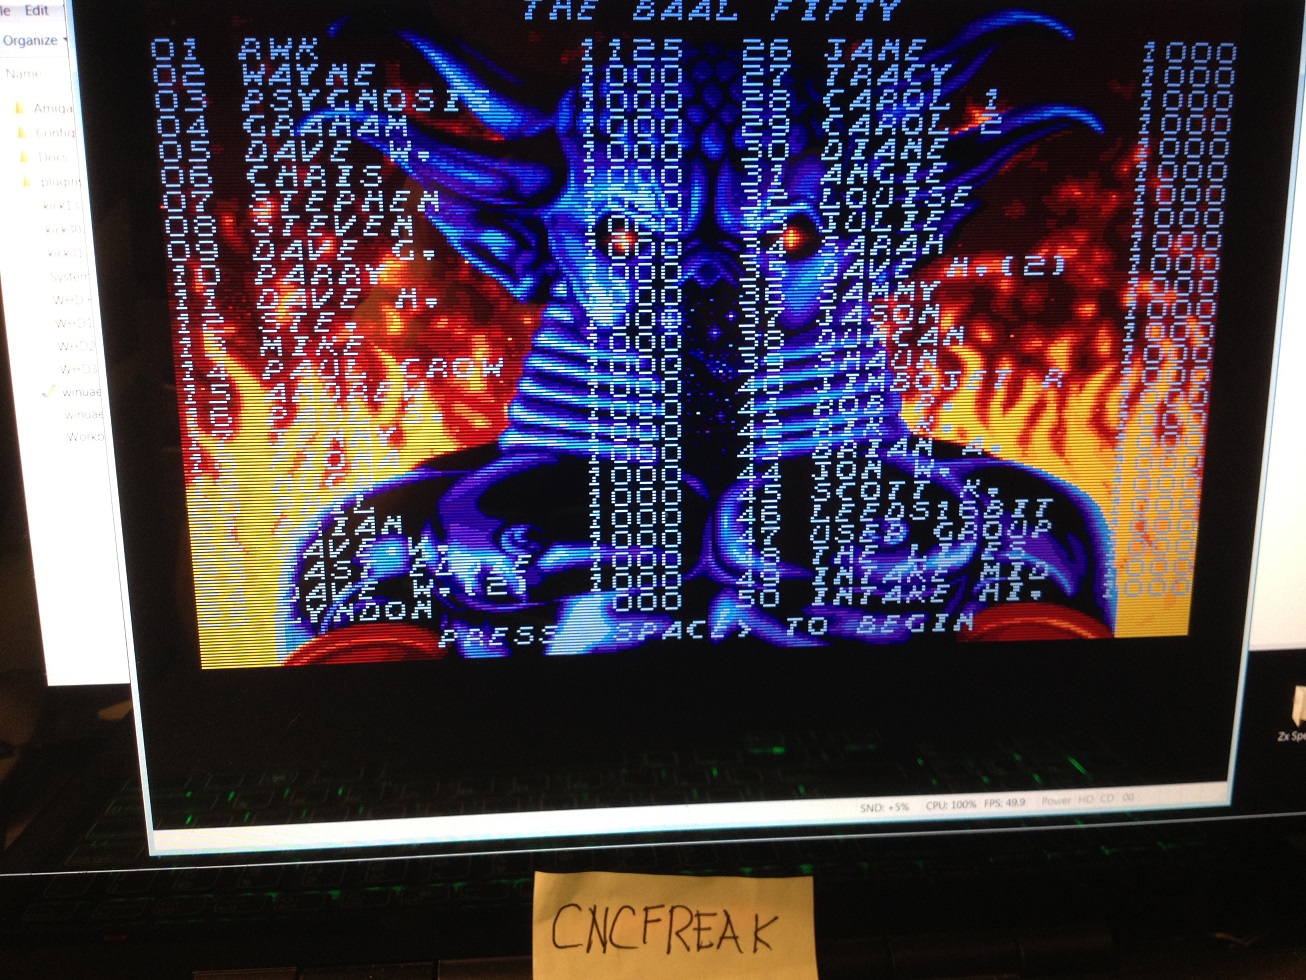 cncfreak: Baal (Amiga Emulated) 1,125 points on 2013-10-16 23:18:58